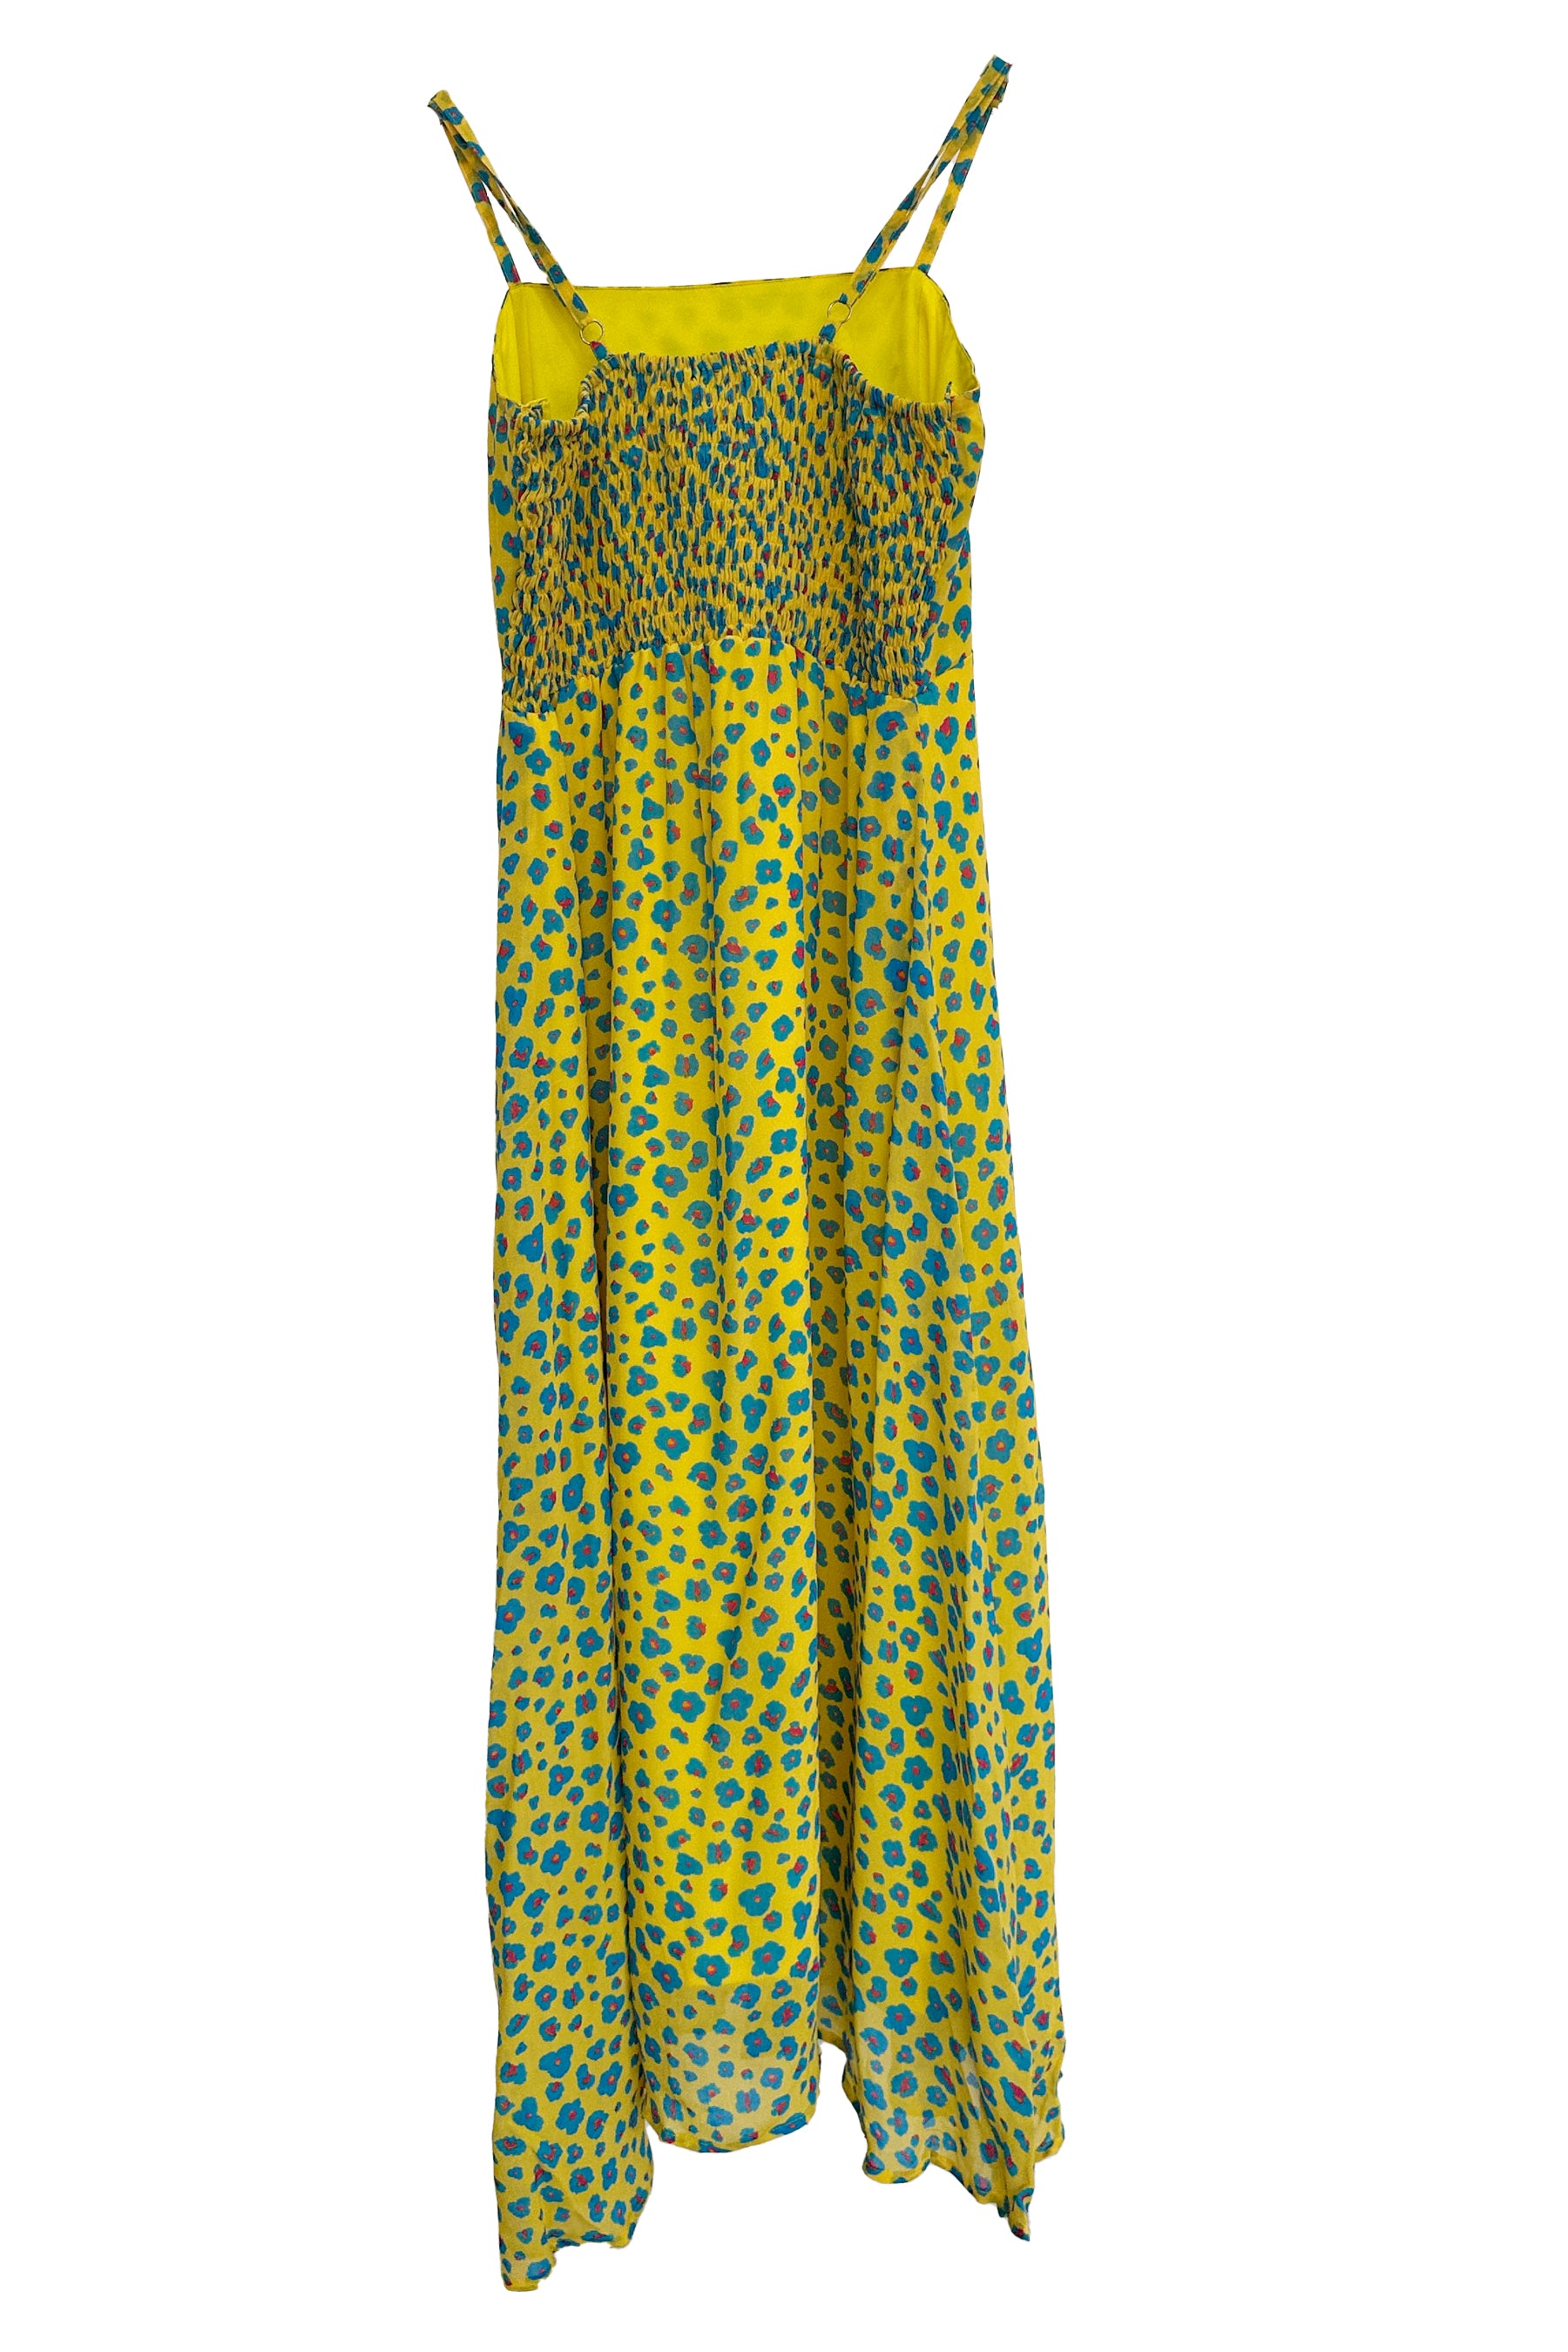 Yellow Jaguar Dress